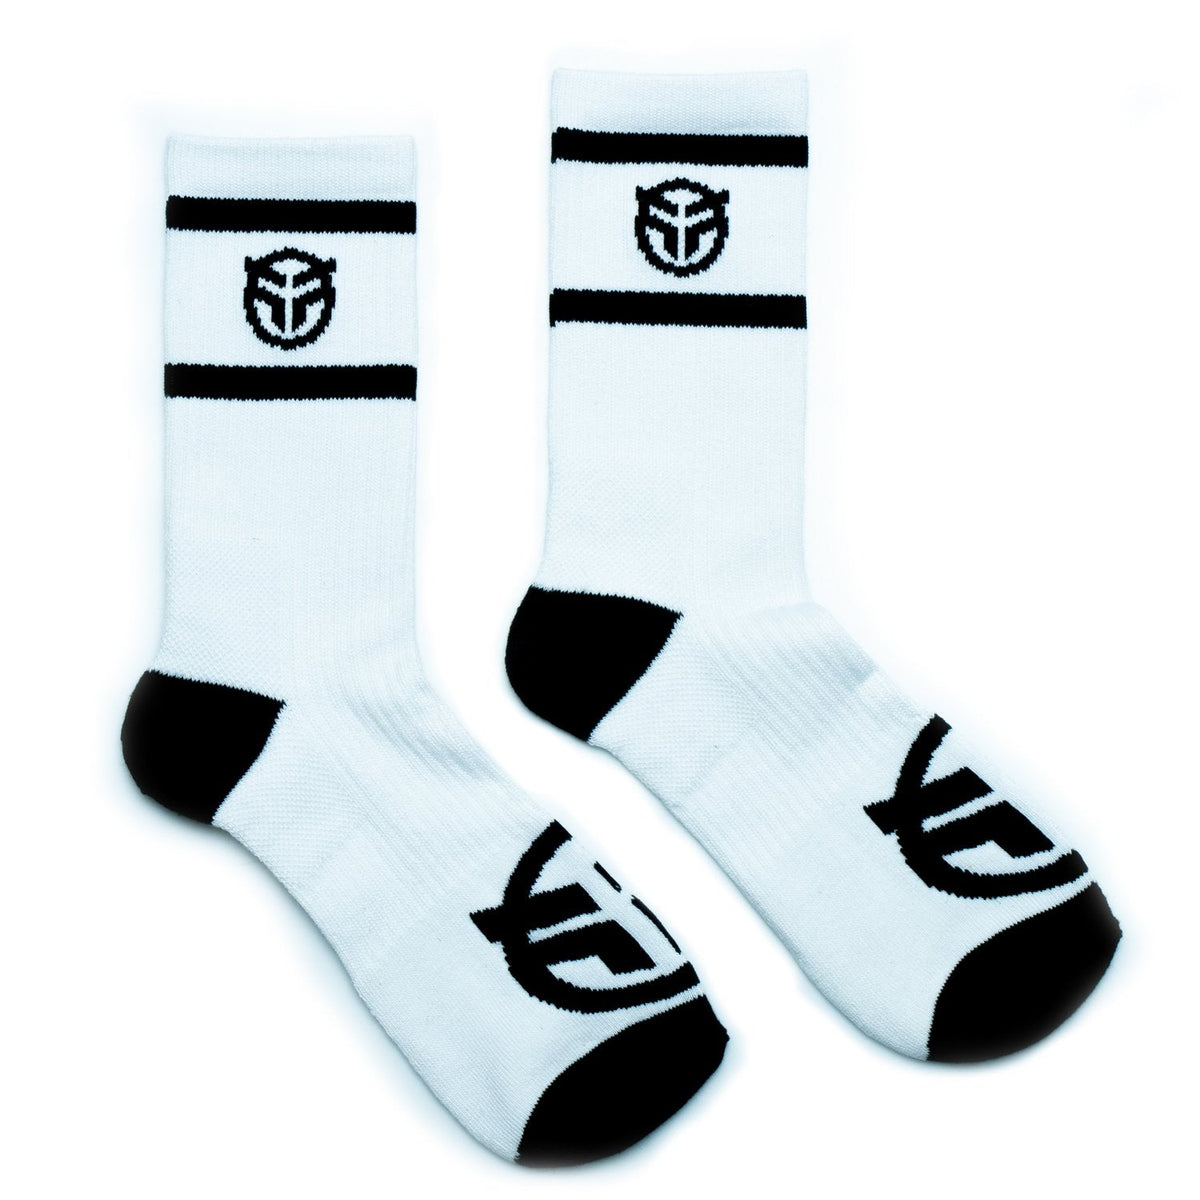 Federal Logo Socks - White With Black Logos | BMX